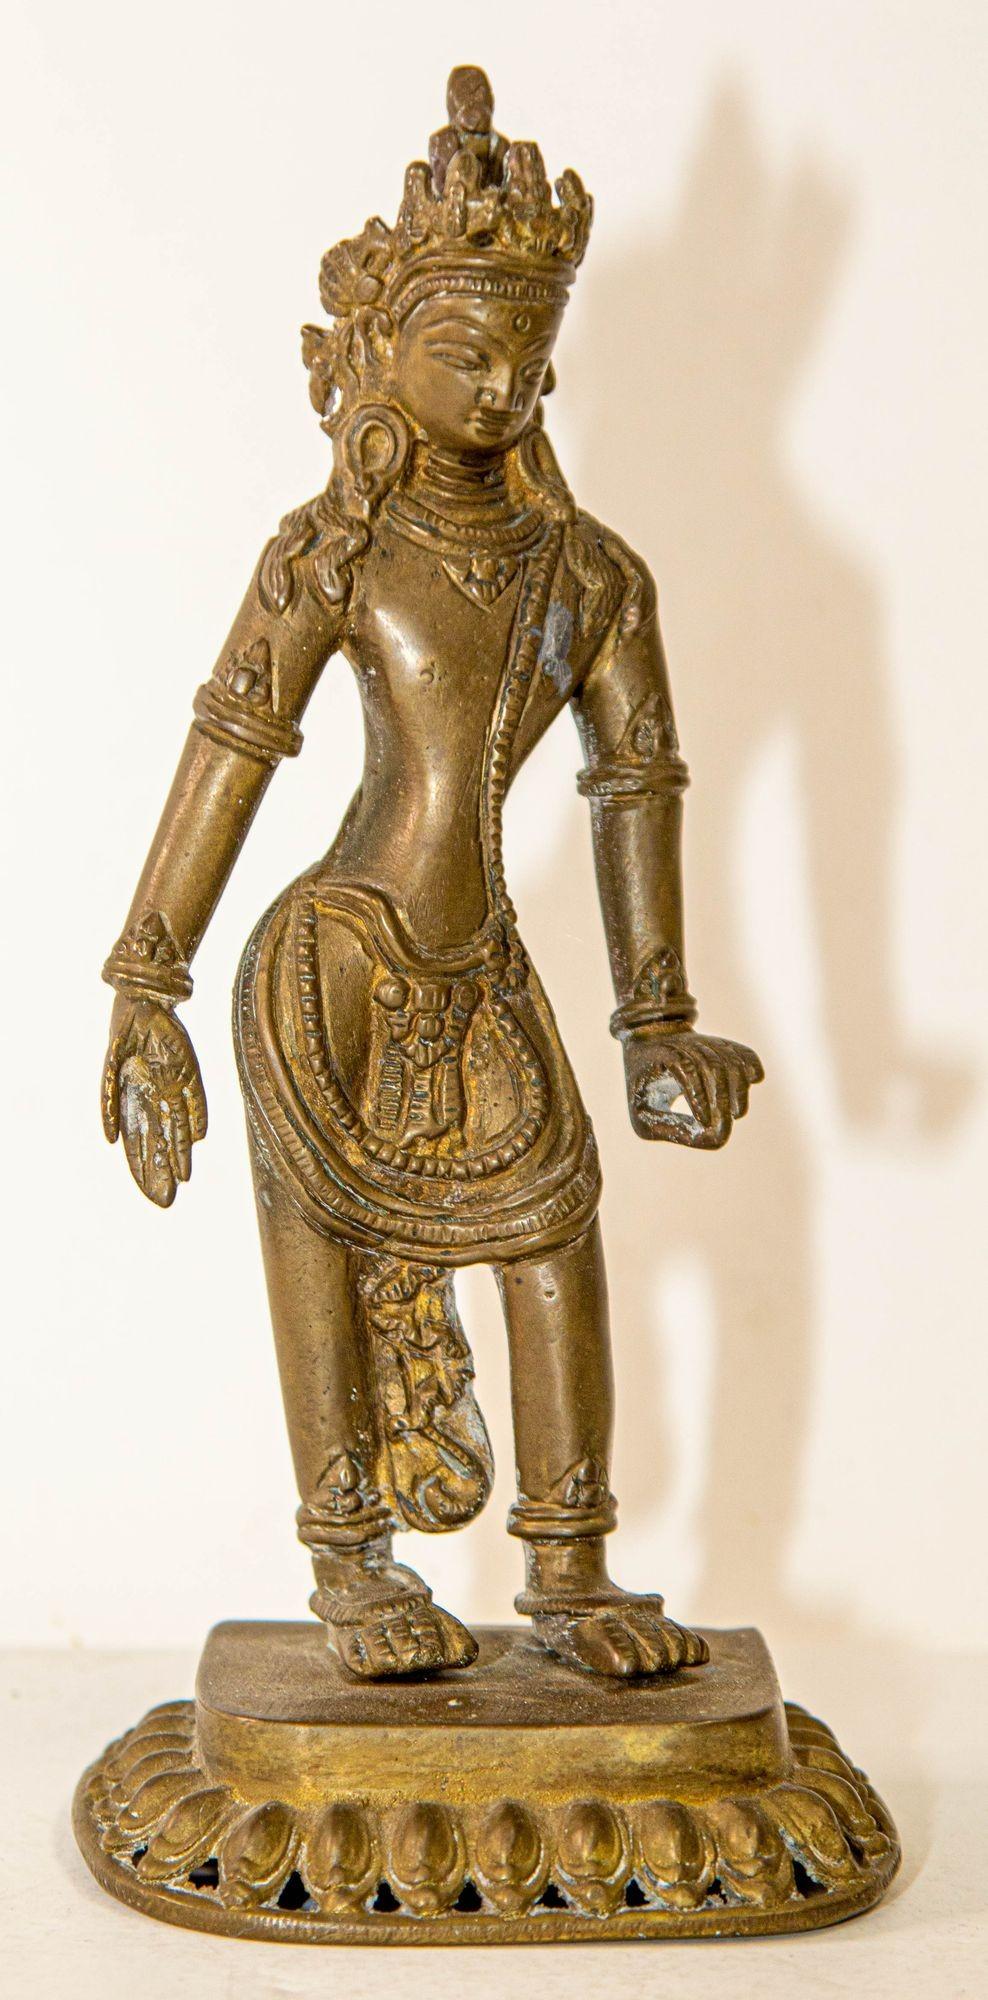 A metal cast bronze finish on brass in beautiful posture figure of Tibetan Buddhist Padmapani Deity Avalokiteshvara 
Beautiful Asian sculpture after the Bodhisattva Avalokiteshvara (Padmapani, bearer of the lotus)
Dimensions: Height : 8.5 inches